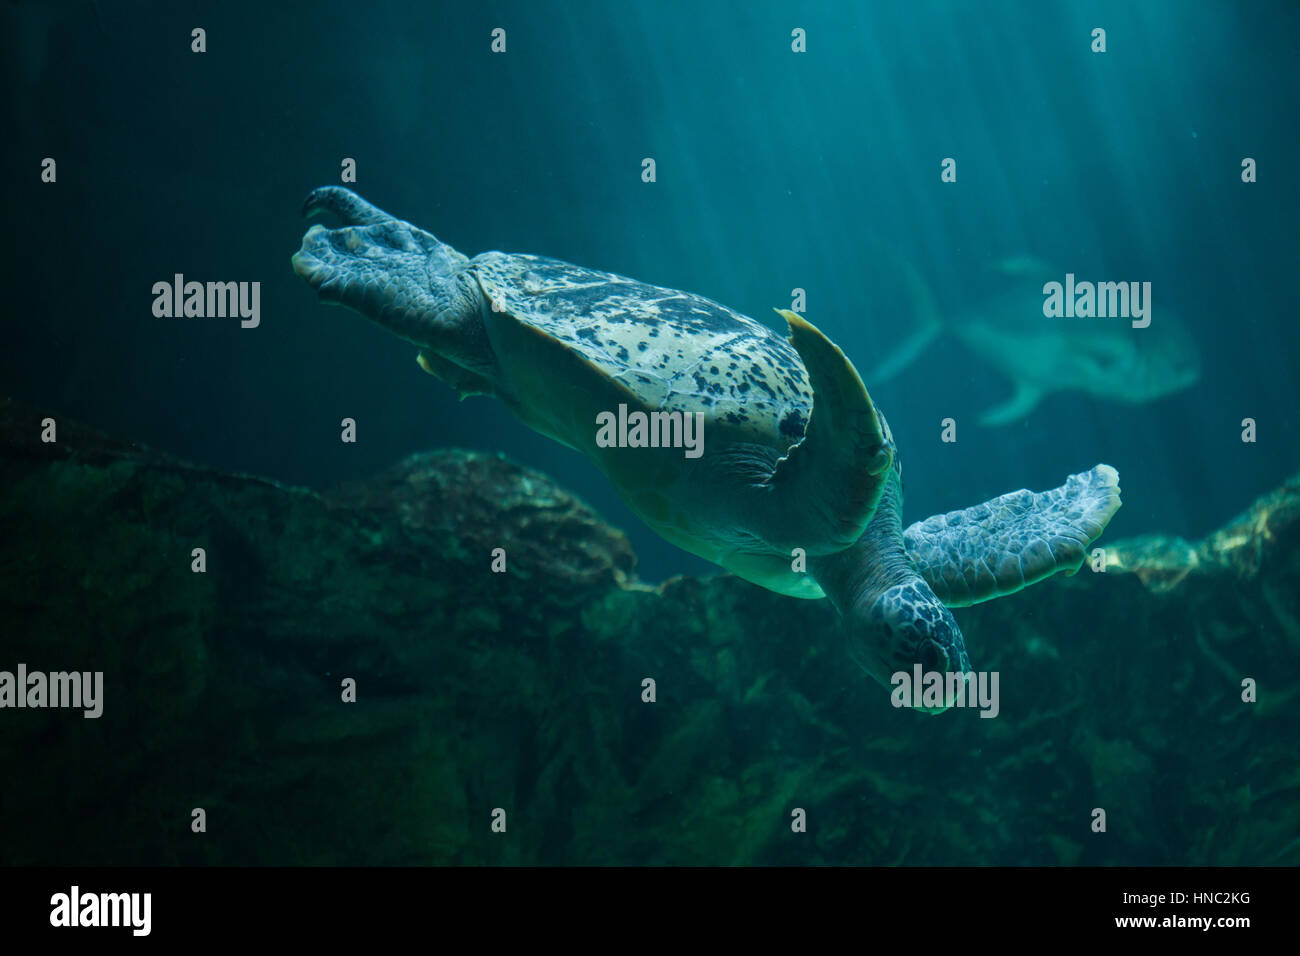 Green sea turtle (Chelonia mydas), also known as the green turtle. Stock Photo